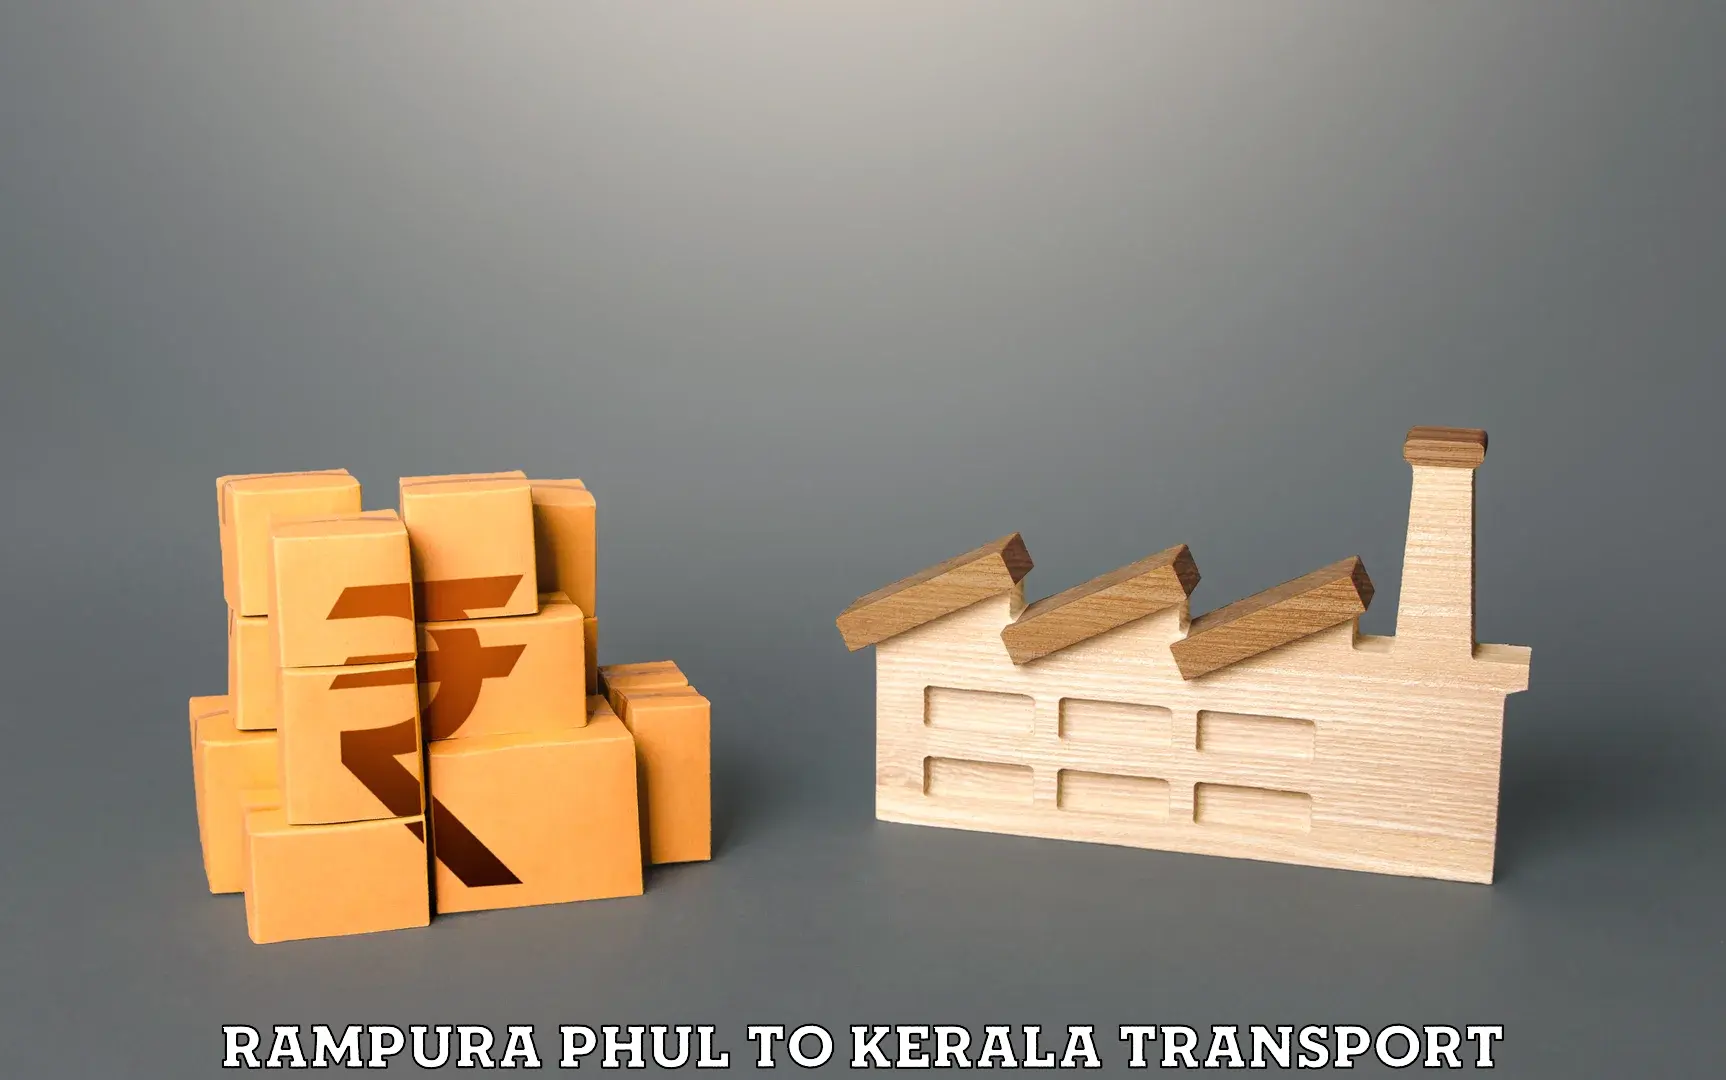 Transport in sharing Rampura Phul to Kerala